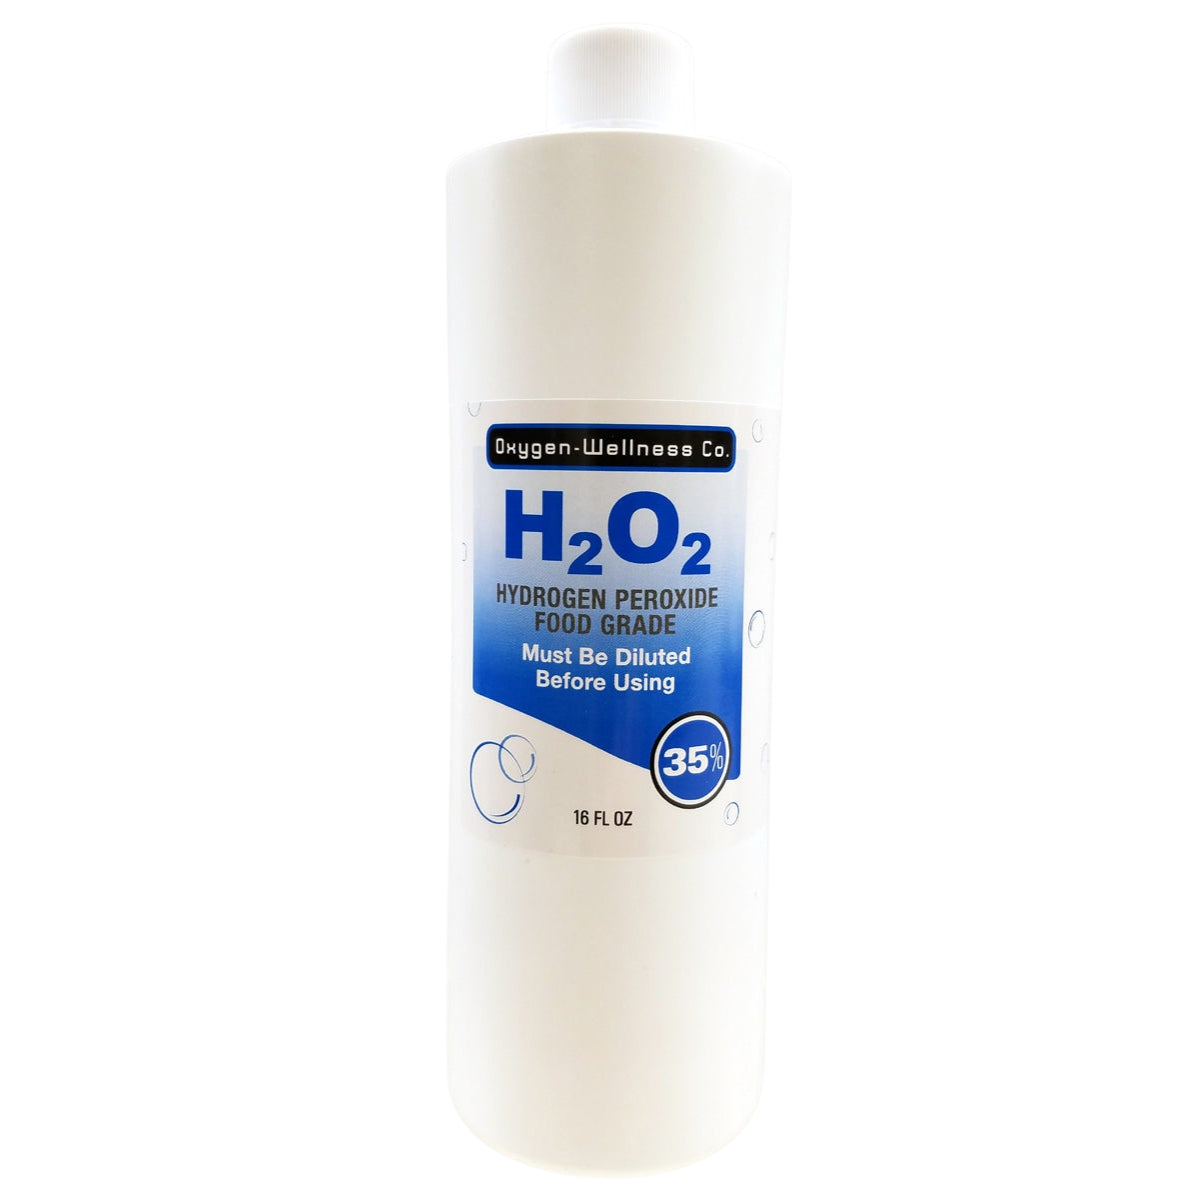 H2O2 Hydrogen Peroxide, Food Grade 35% LIMIT 2 PER HOUSEHOLD/CUSTOMER